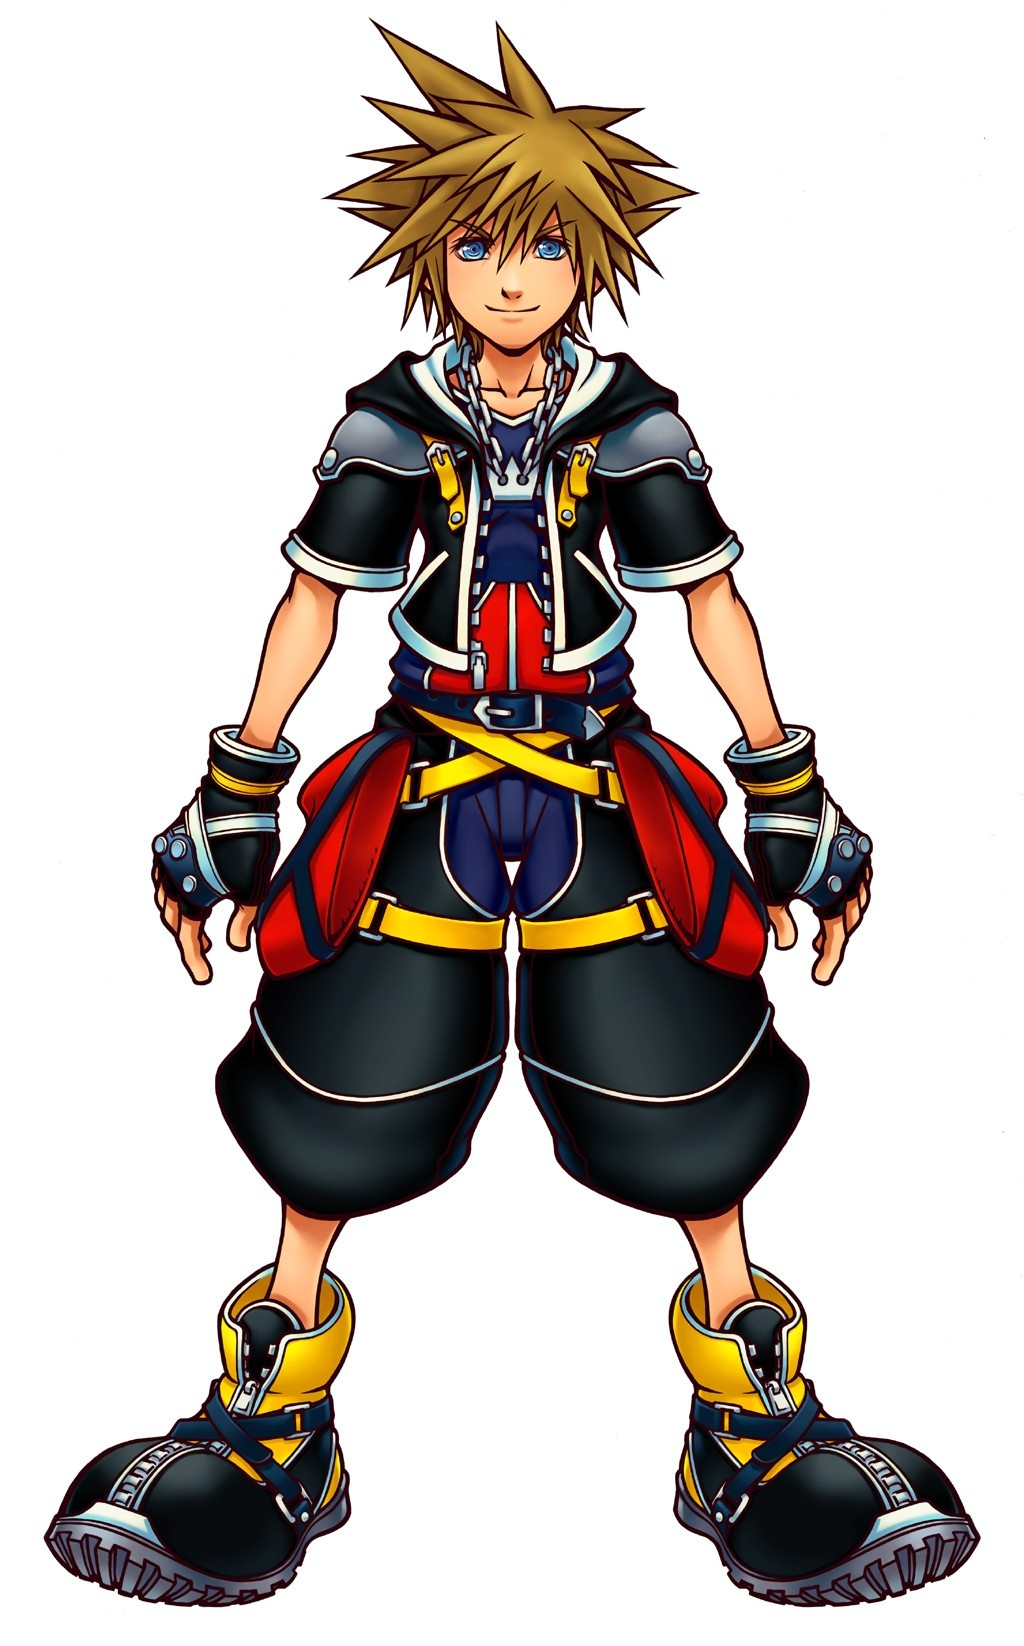 Sora Render From Super Smash Bros Ultimate Art - ID: 148199